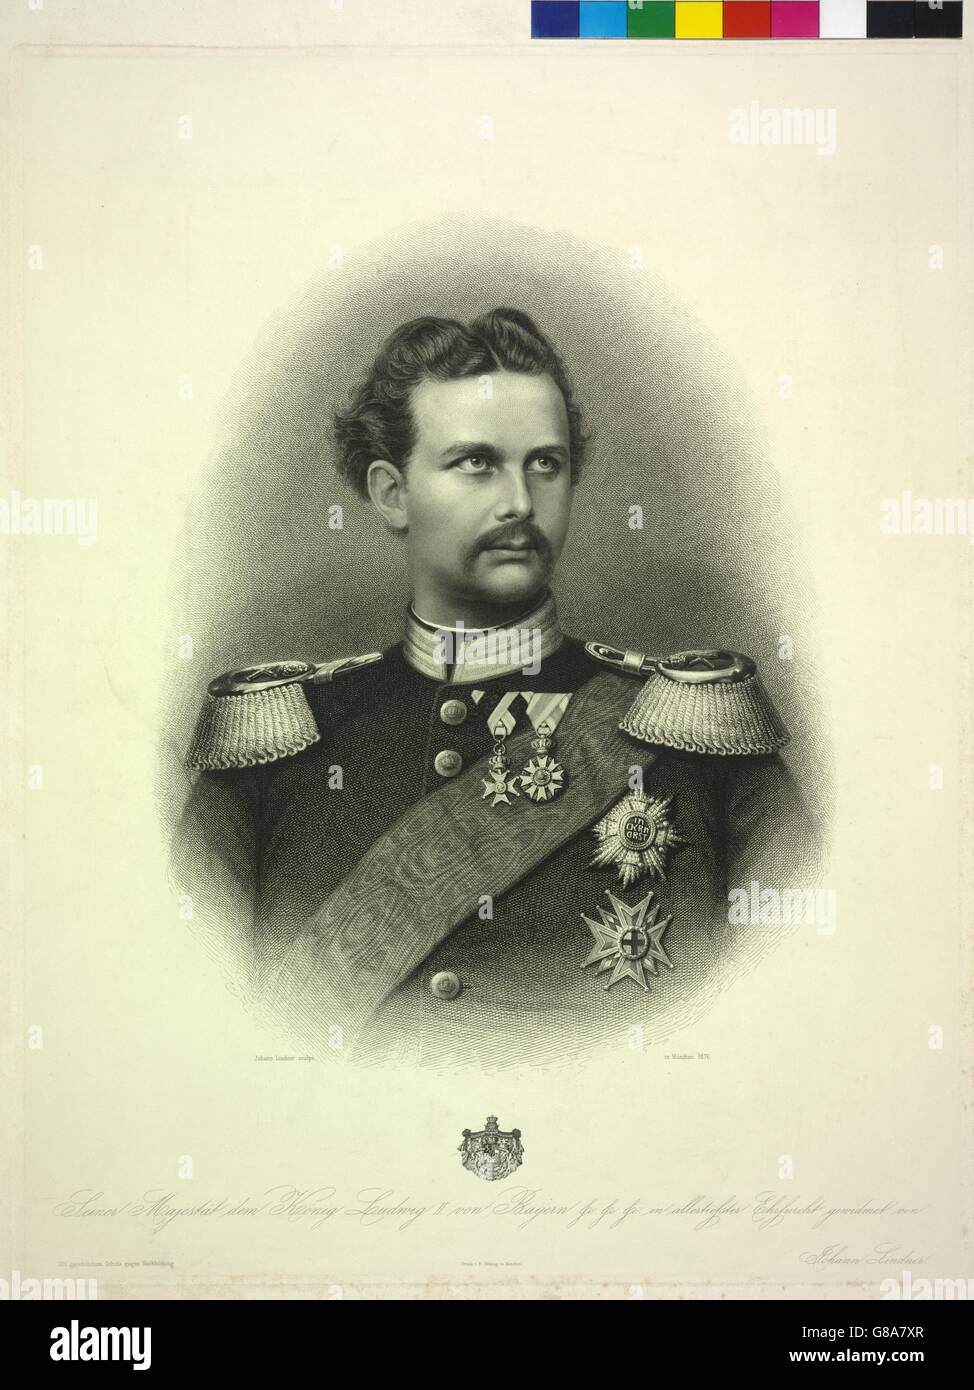 Ludwig II., König von Bayern Stock Photo